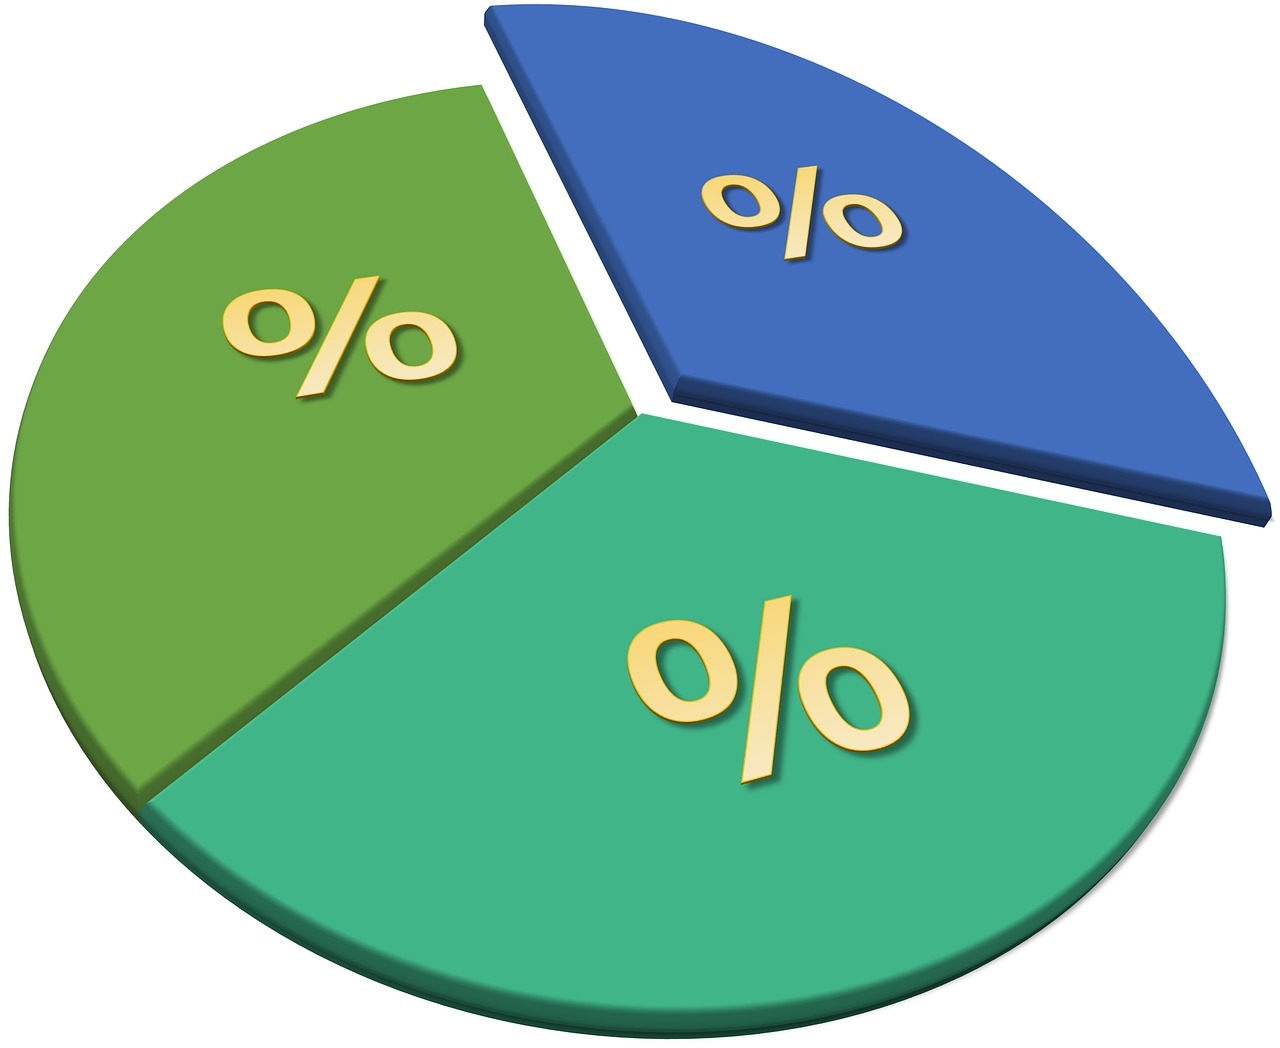 pie chart percentage diagram free photo